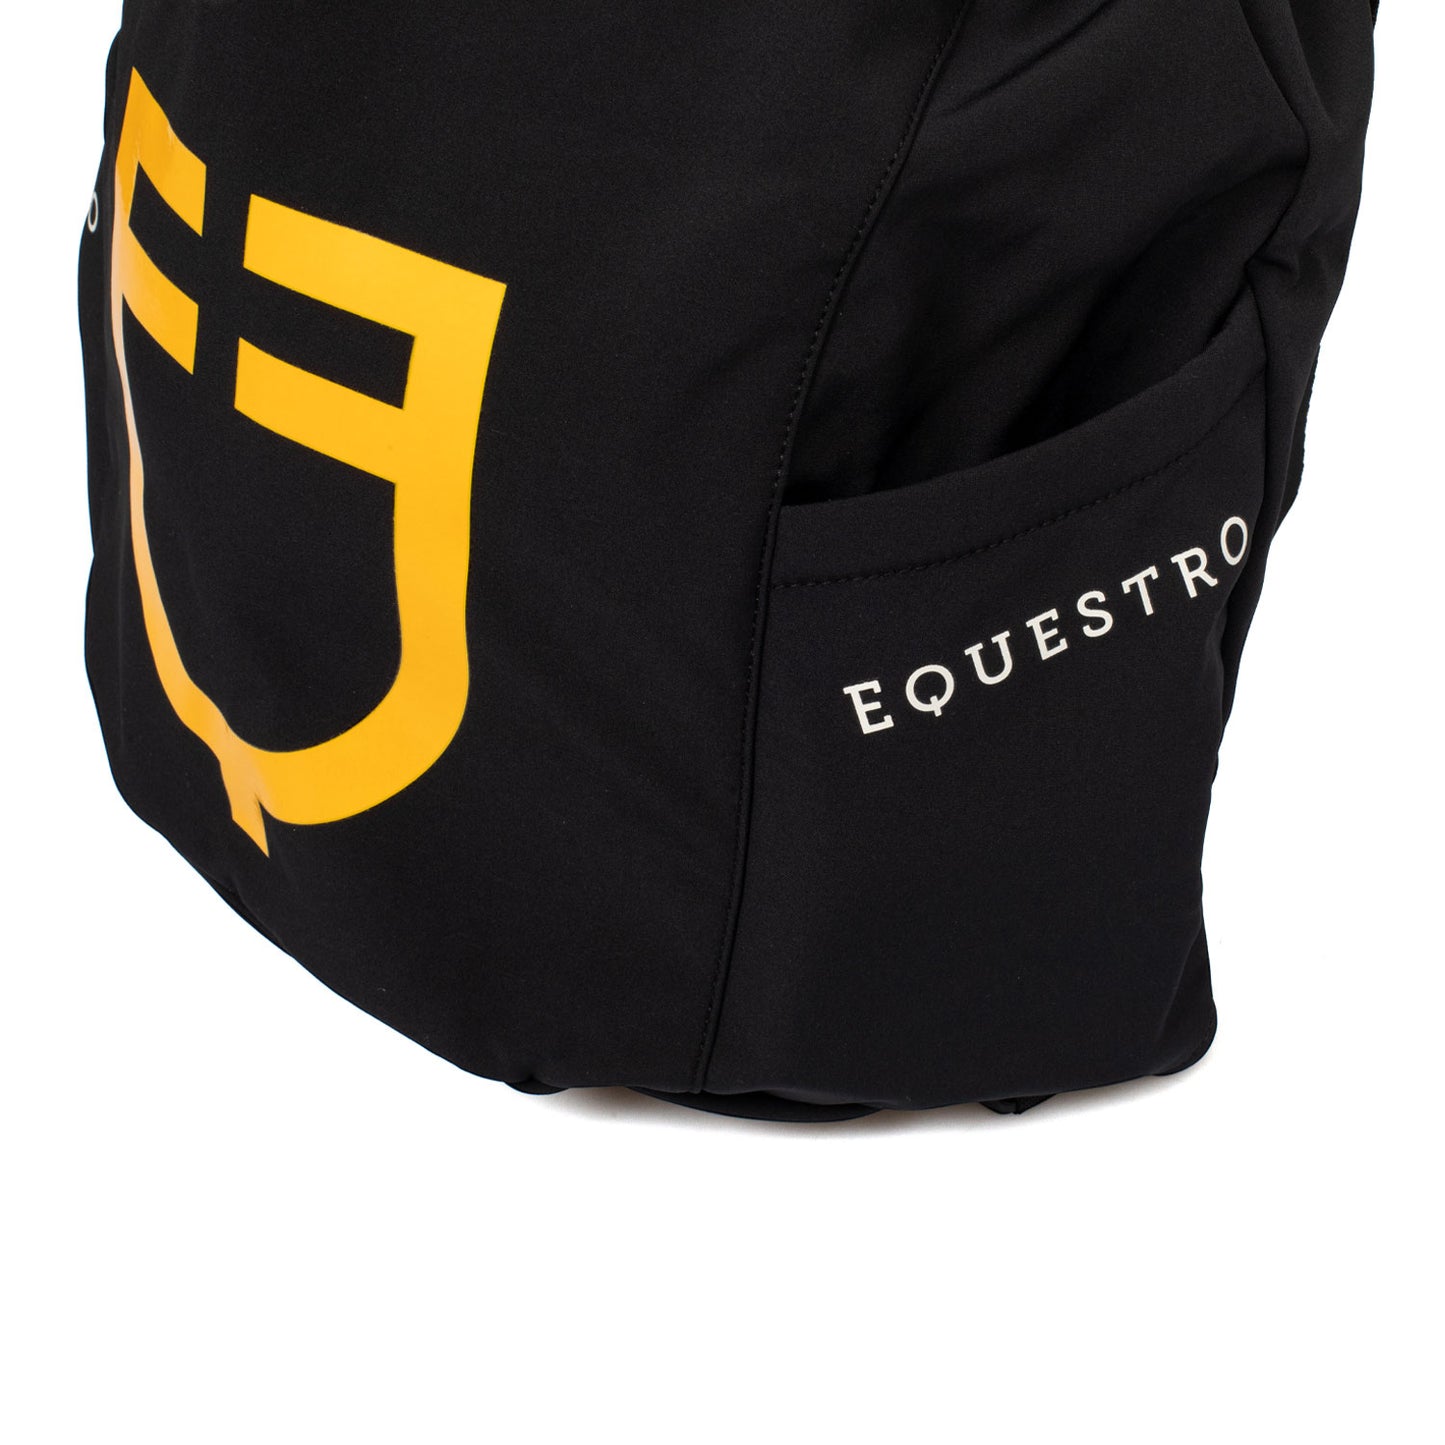 EQUESTRO - Helmet Bag with Side Pockets